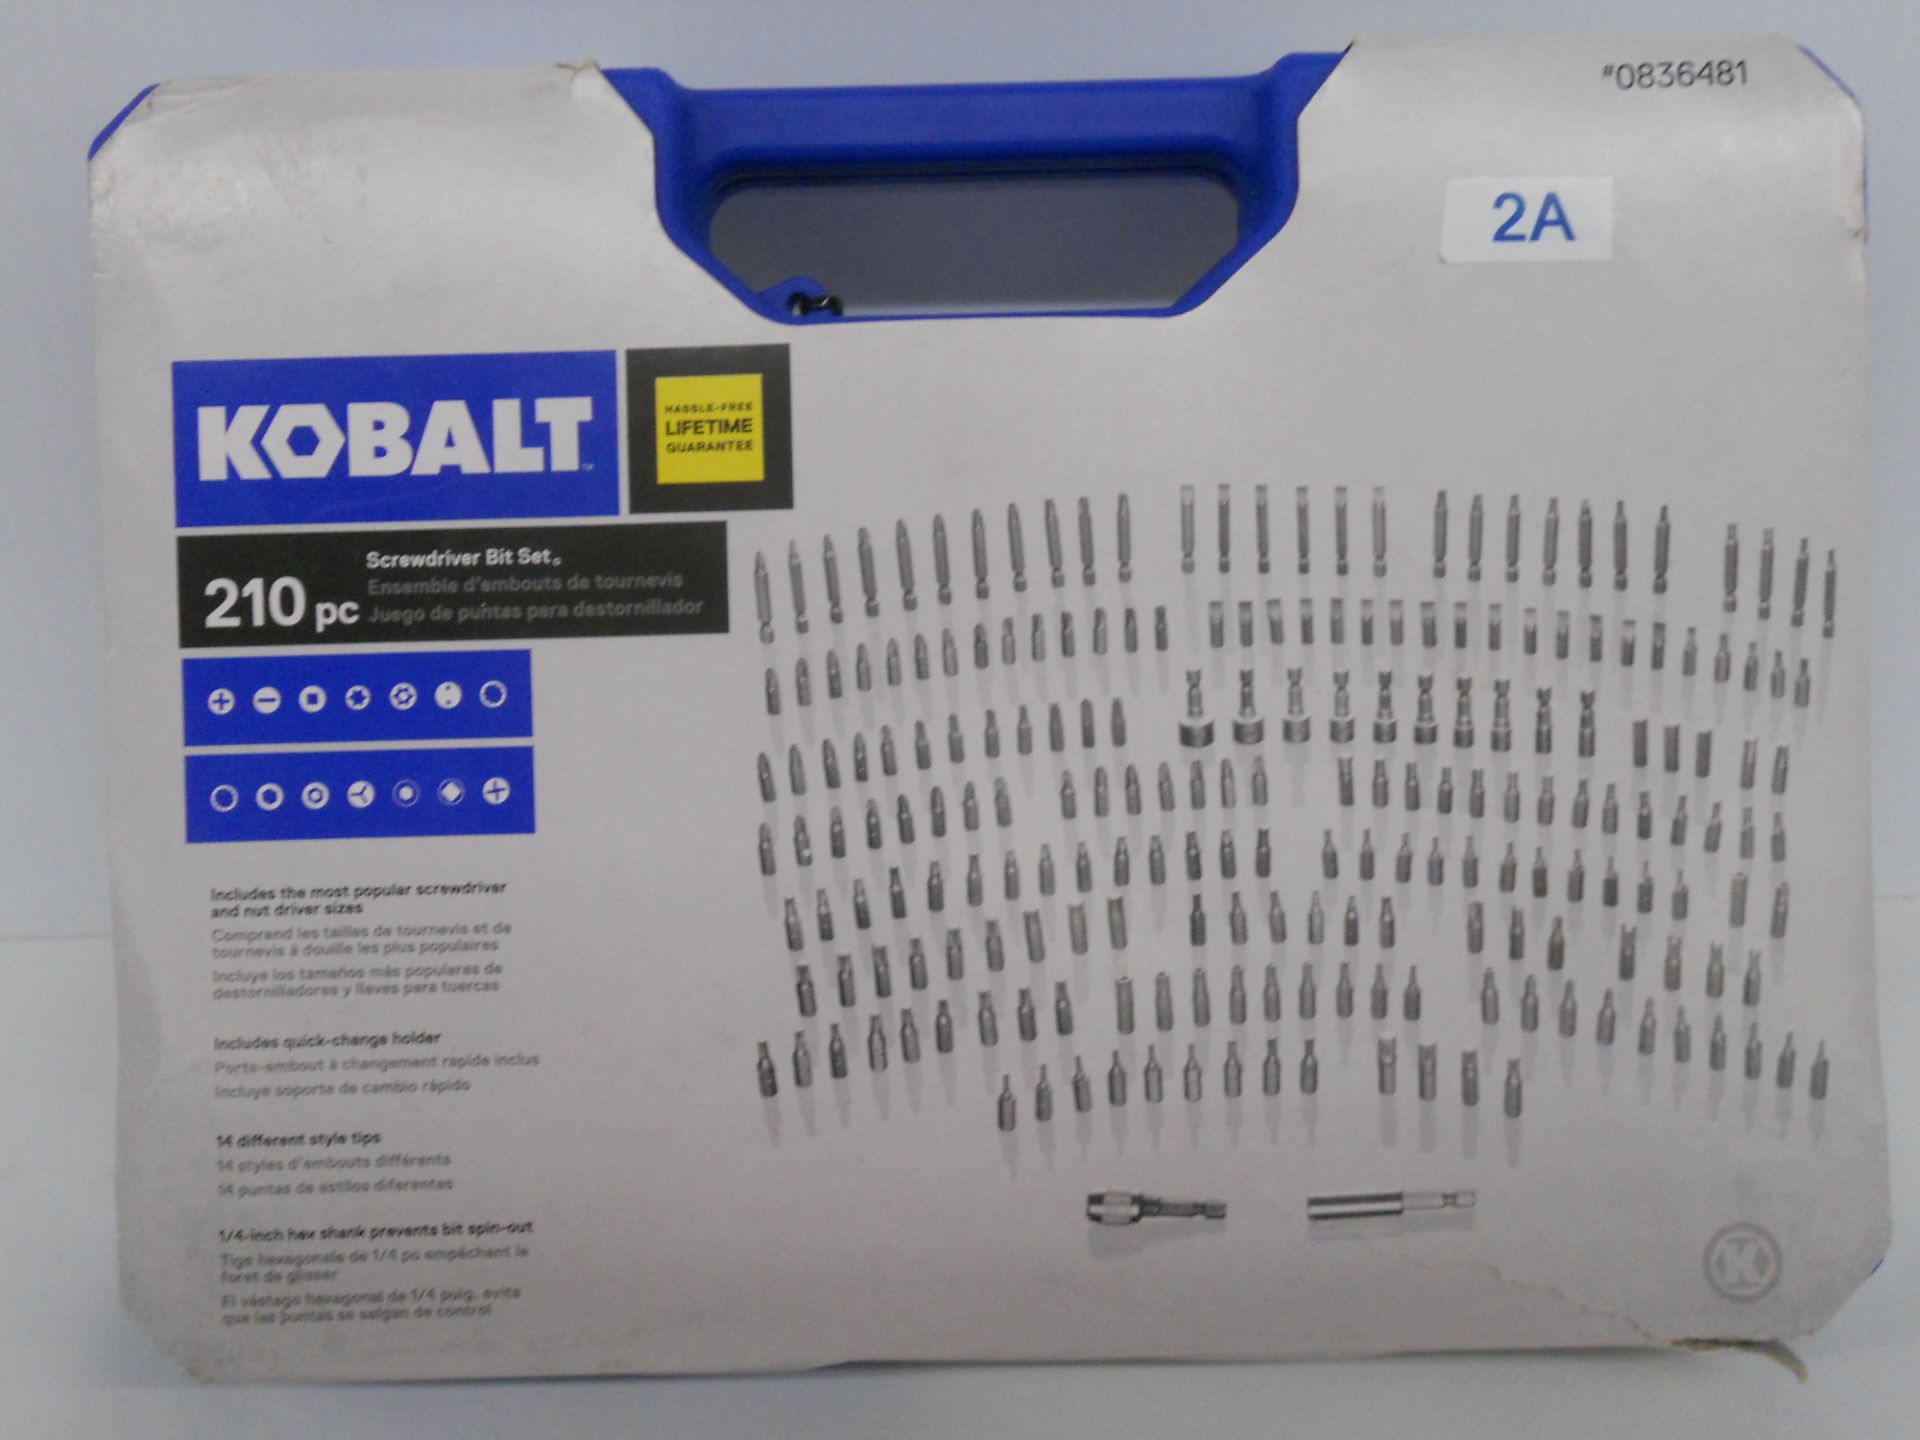 Kobalt 210-piece Screwdriver Bit Set